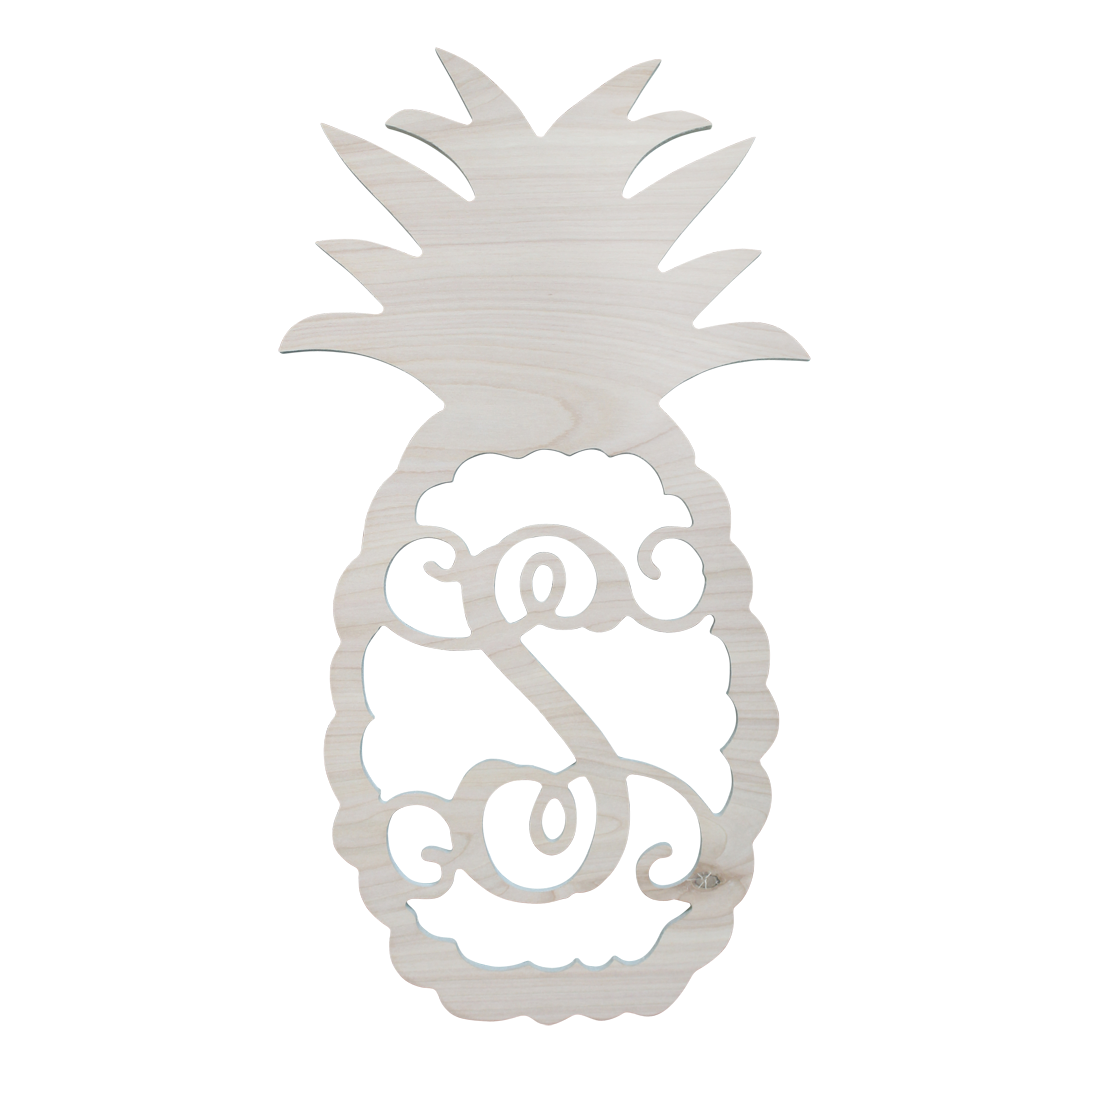 pineapple clipart monogram